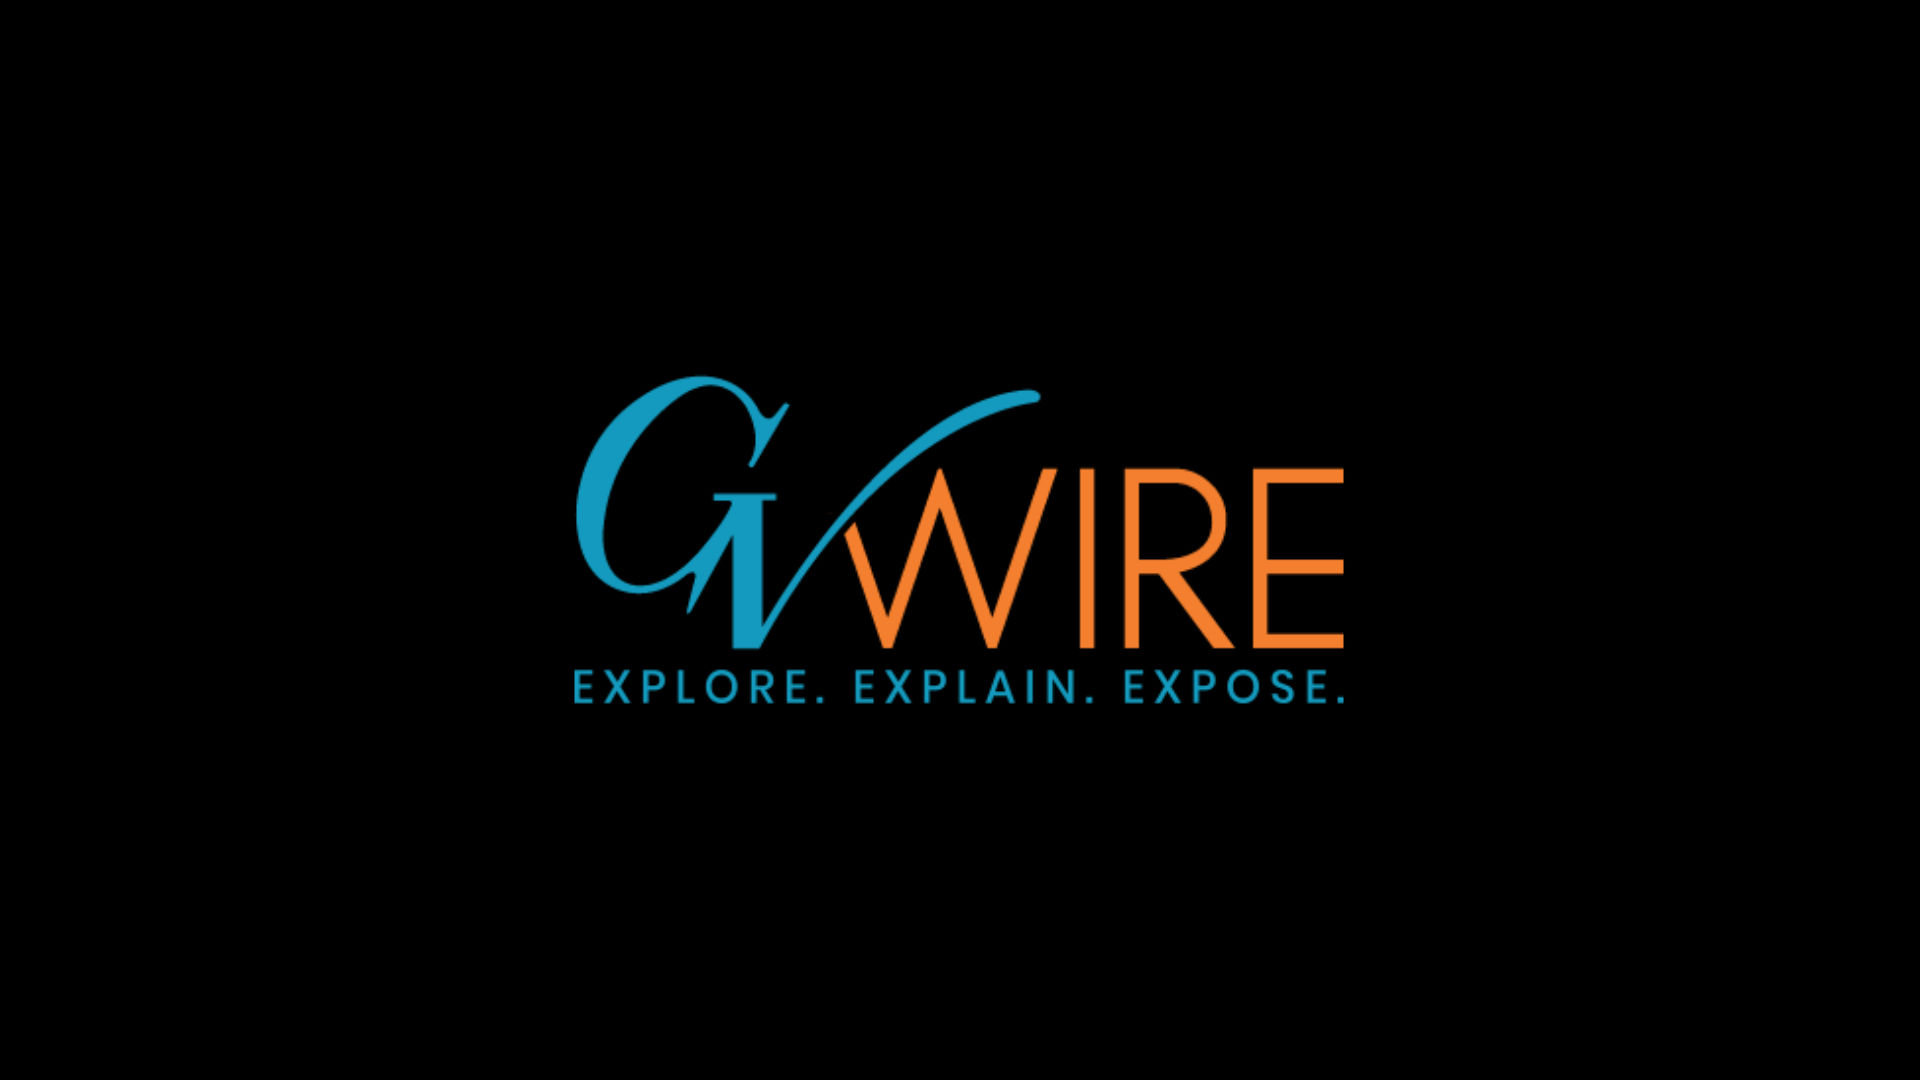 GV Wire Cover Photo in Color